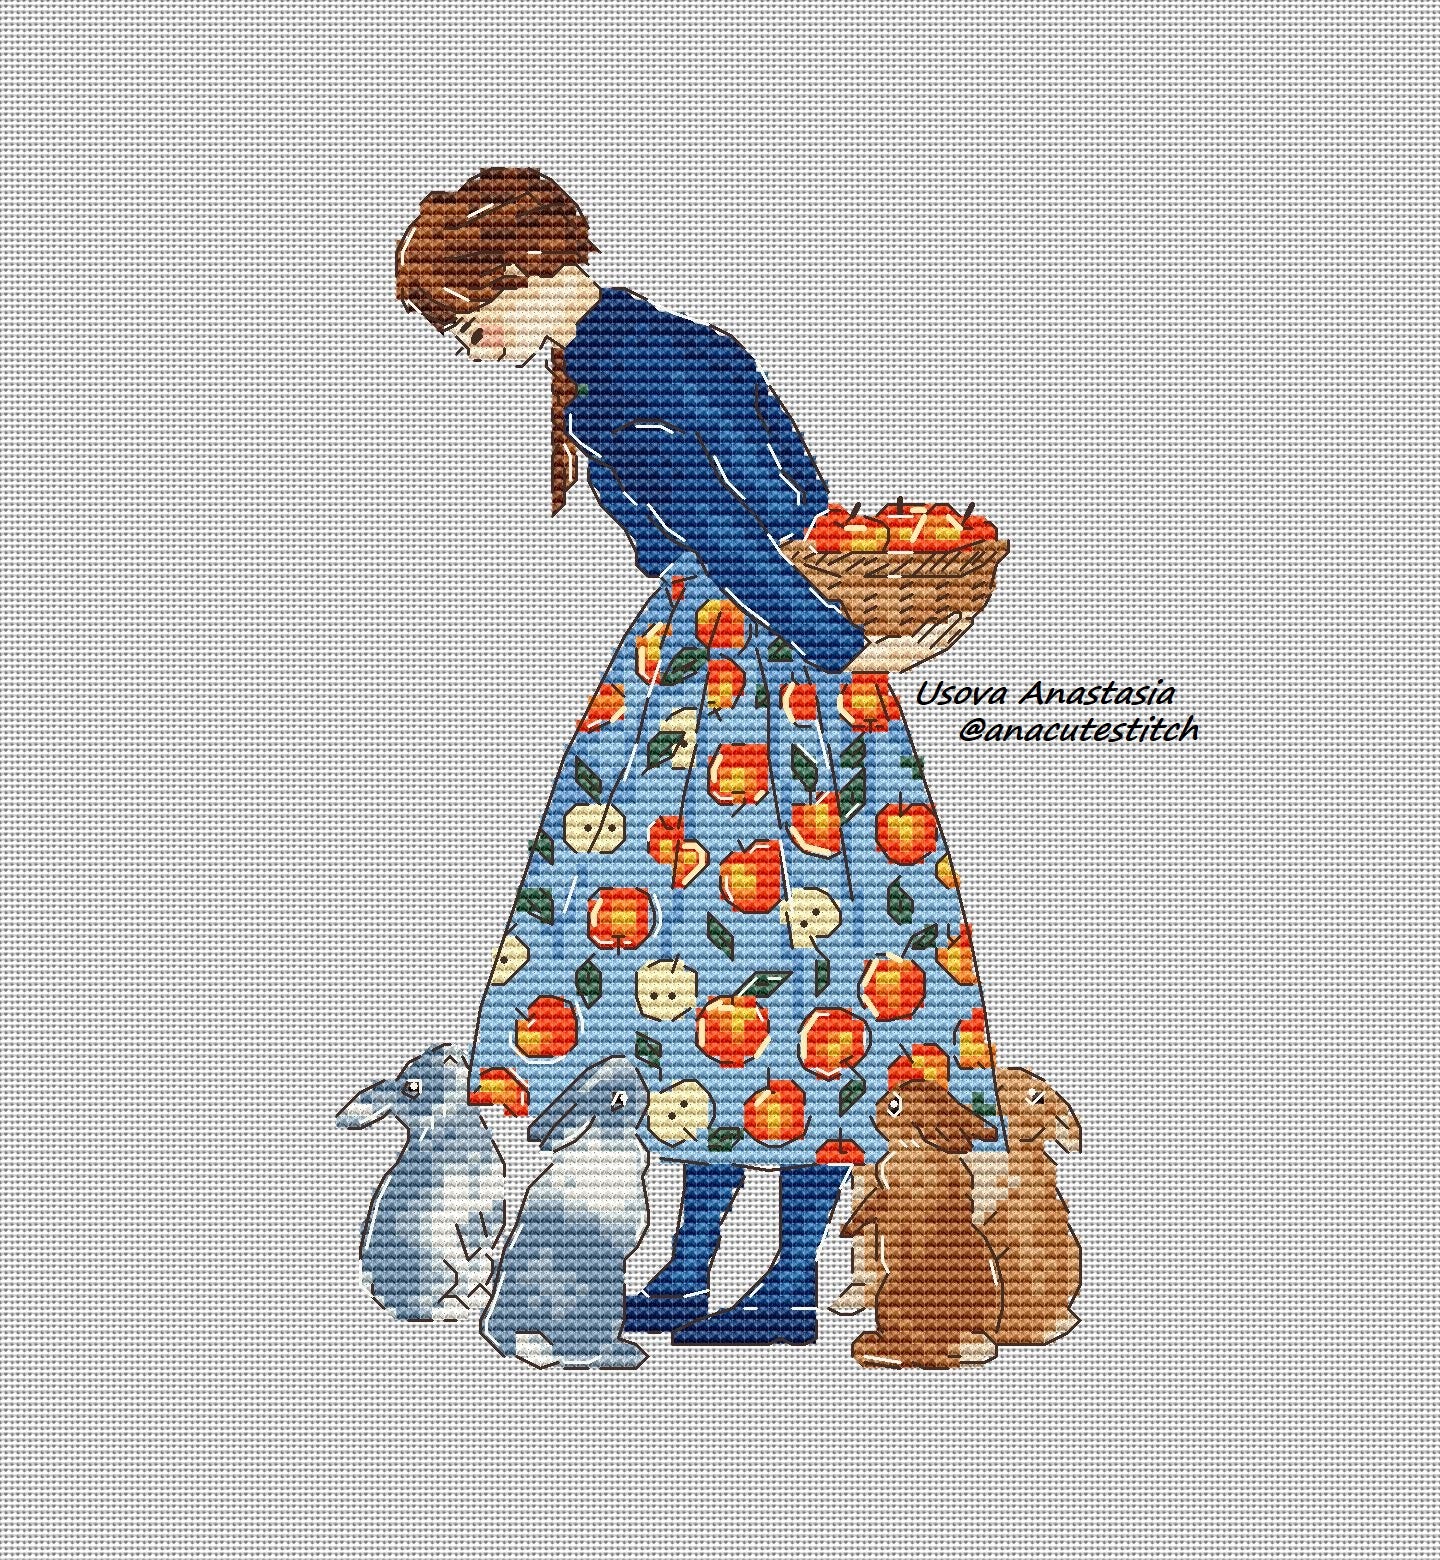 Digital Cross Stitch Pattern "Girl and Rabbits"